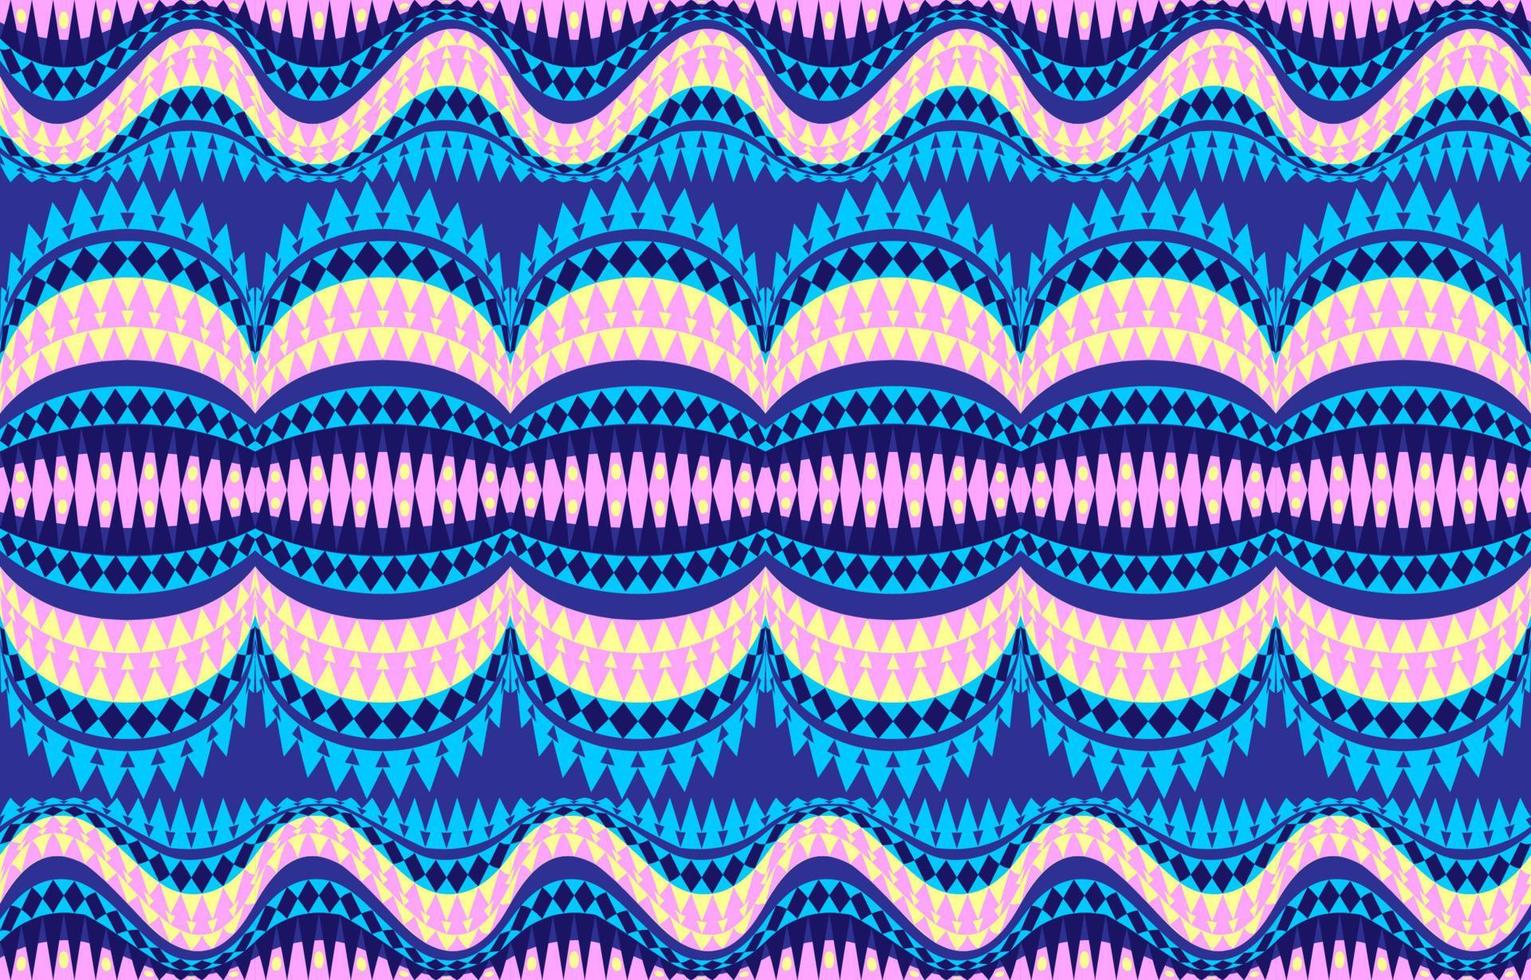 tyg textil- mönster vågig diagonal kurva Ränder. etnisk geometrisk stam- inföding aztec arabesk tyg matta indisk arab afrikansk sömlös mönster. utsmyckad linje grafisk broderi stil. vektor. vektor